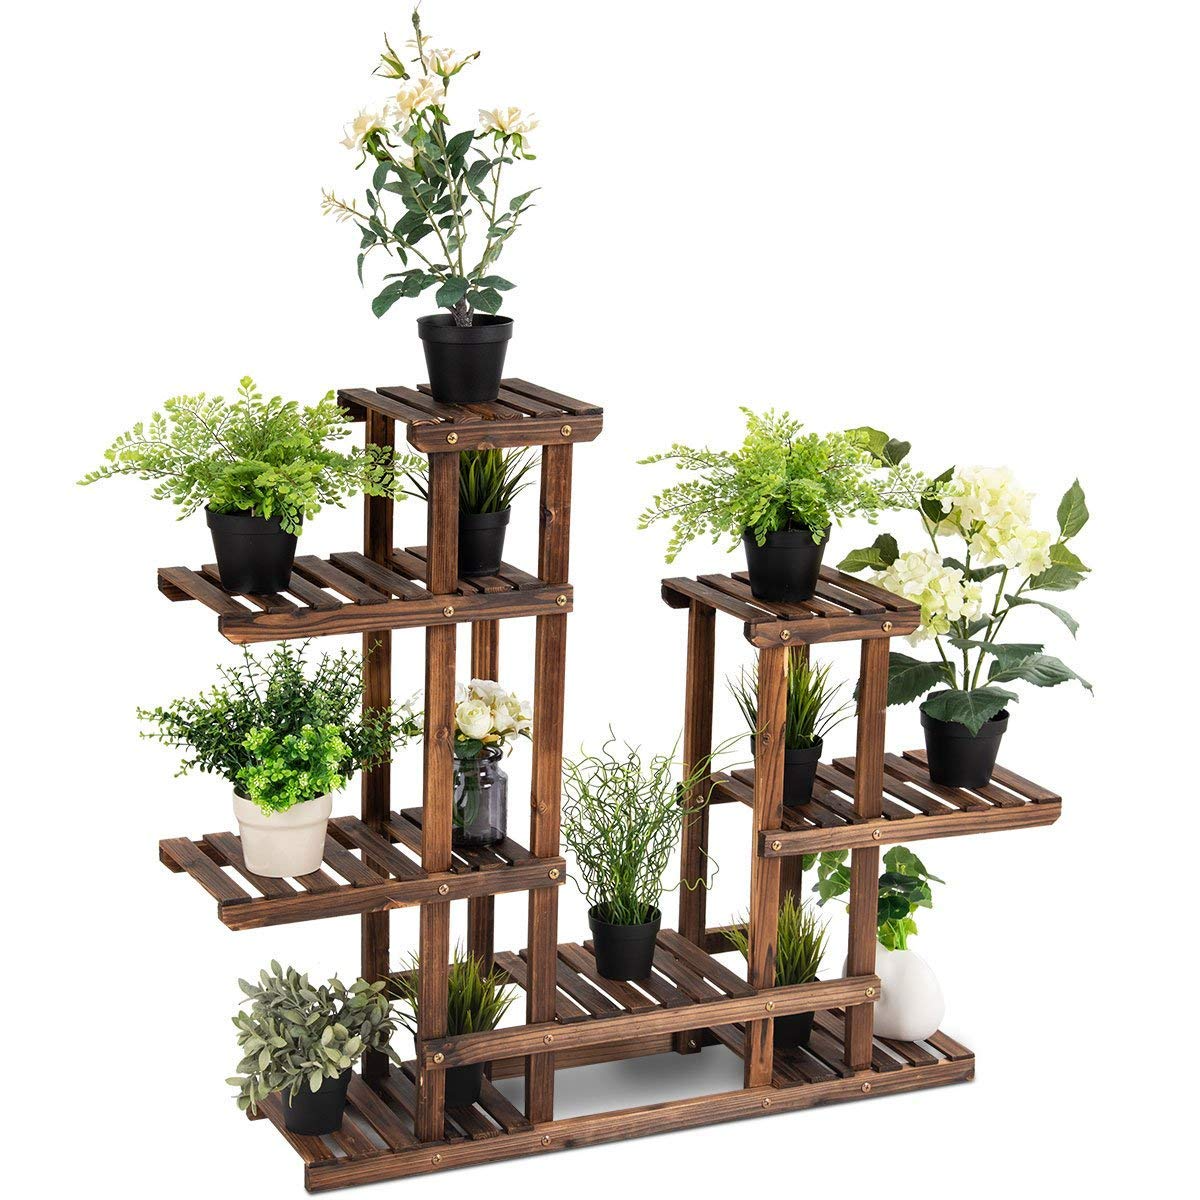 Giantex Flower Rack Wood Plant Stand